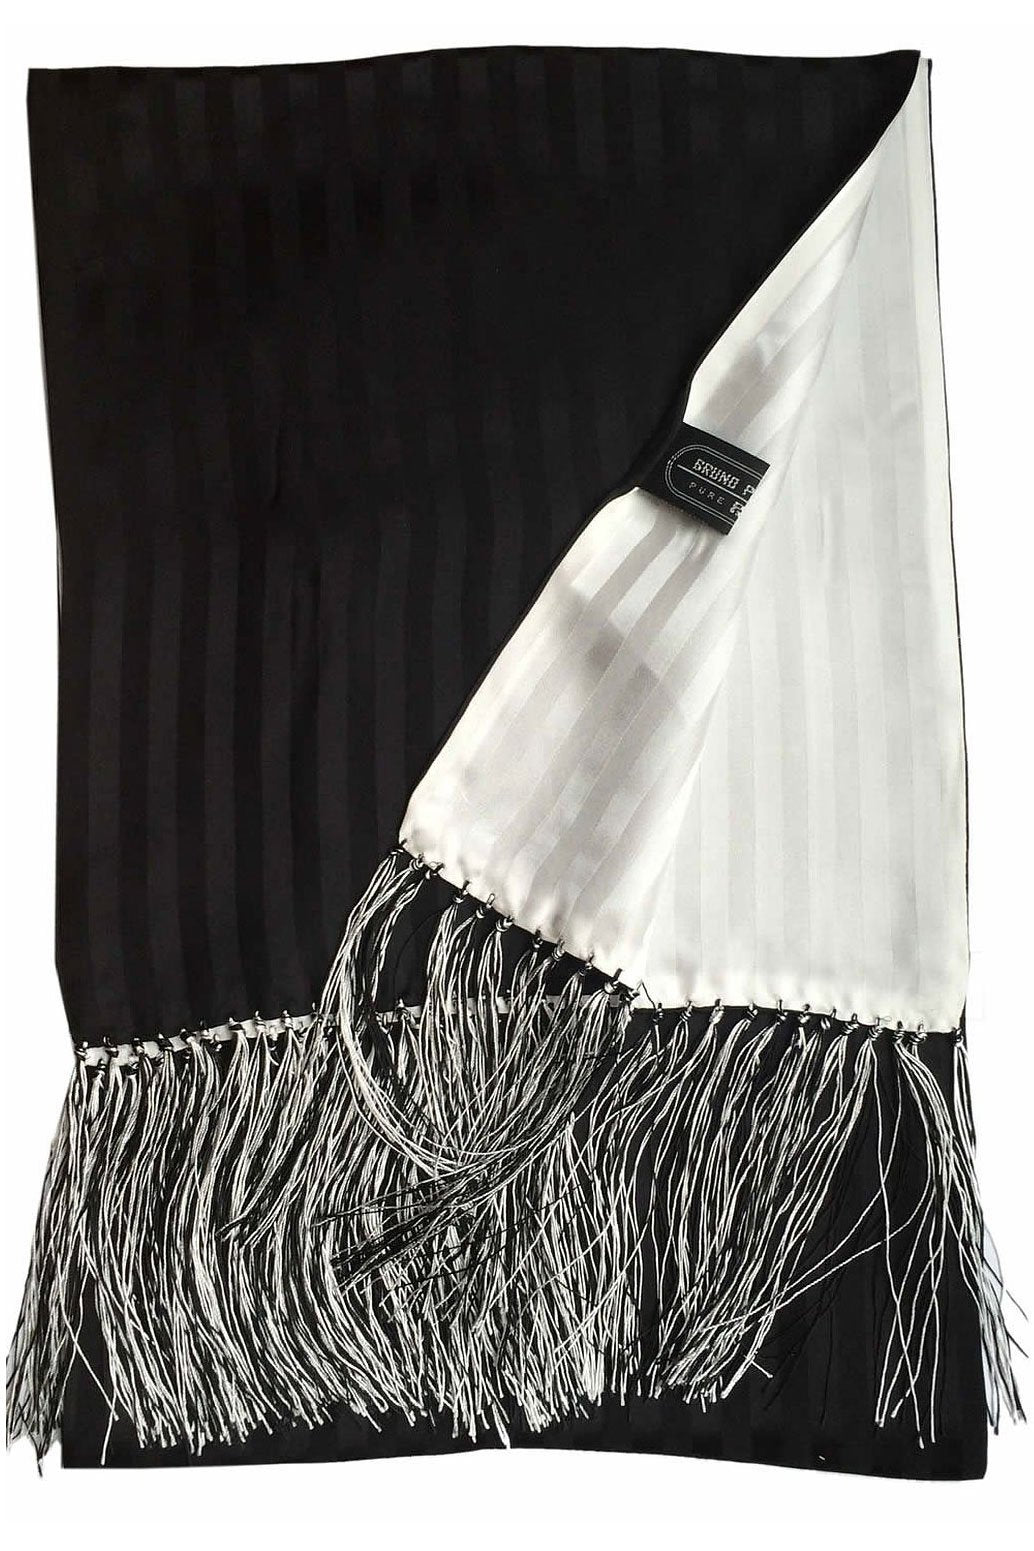 Bruno Piatelli Black & White Reversible Striped Silk Tuxedo Scarf